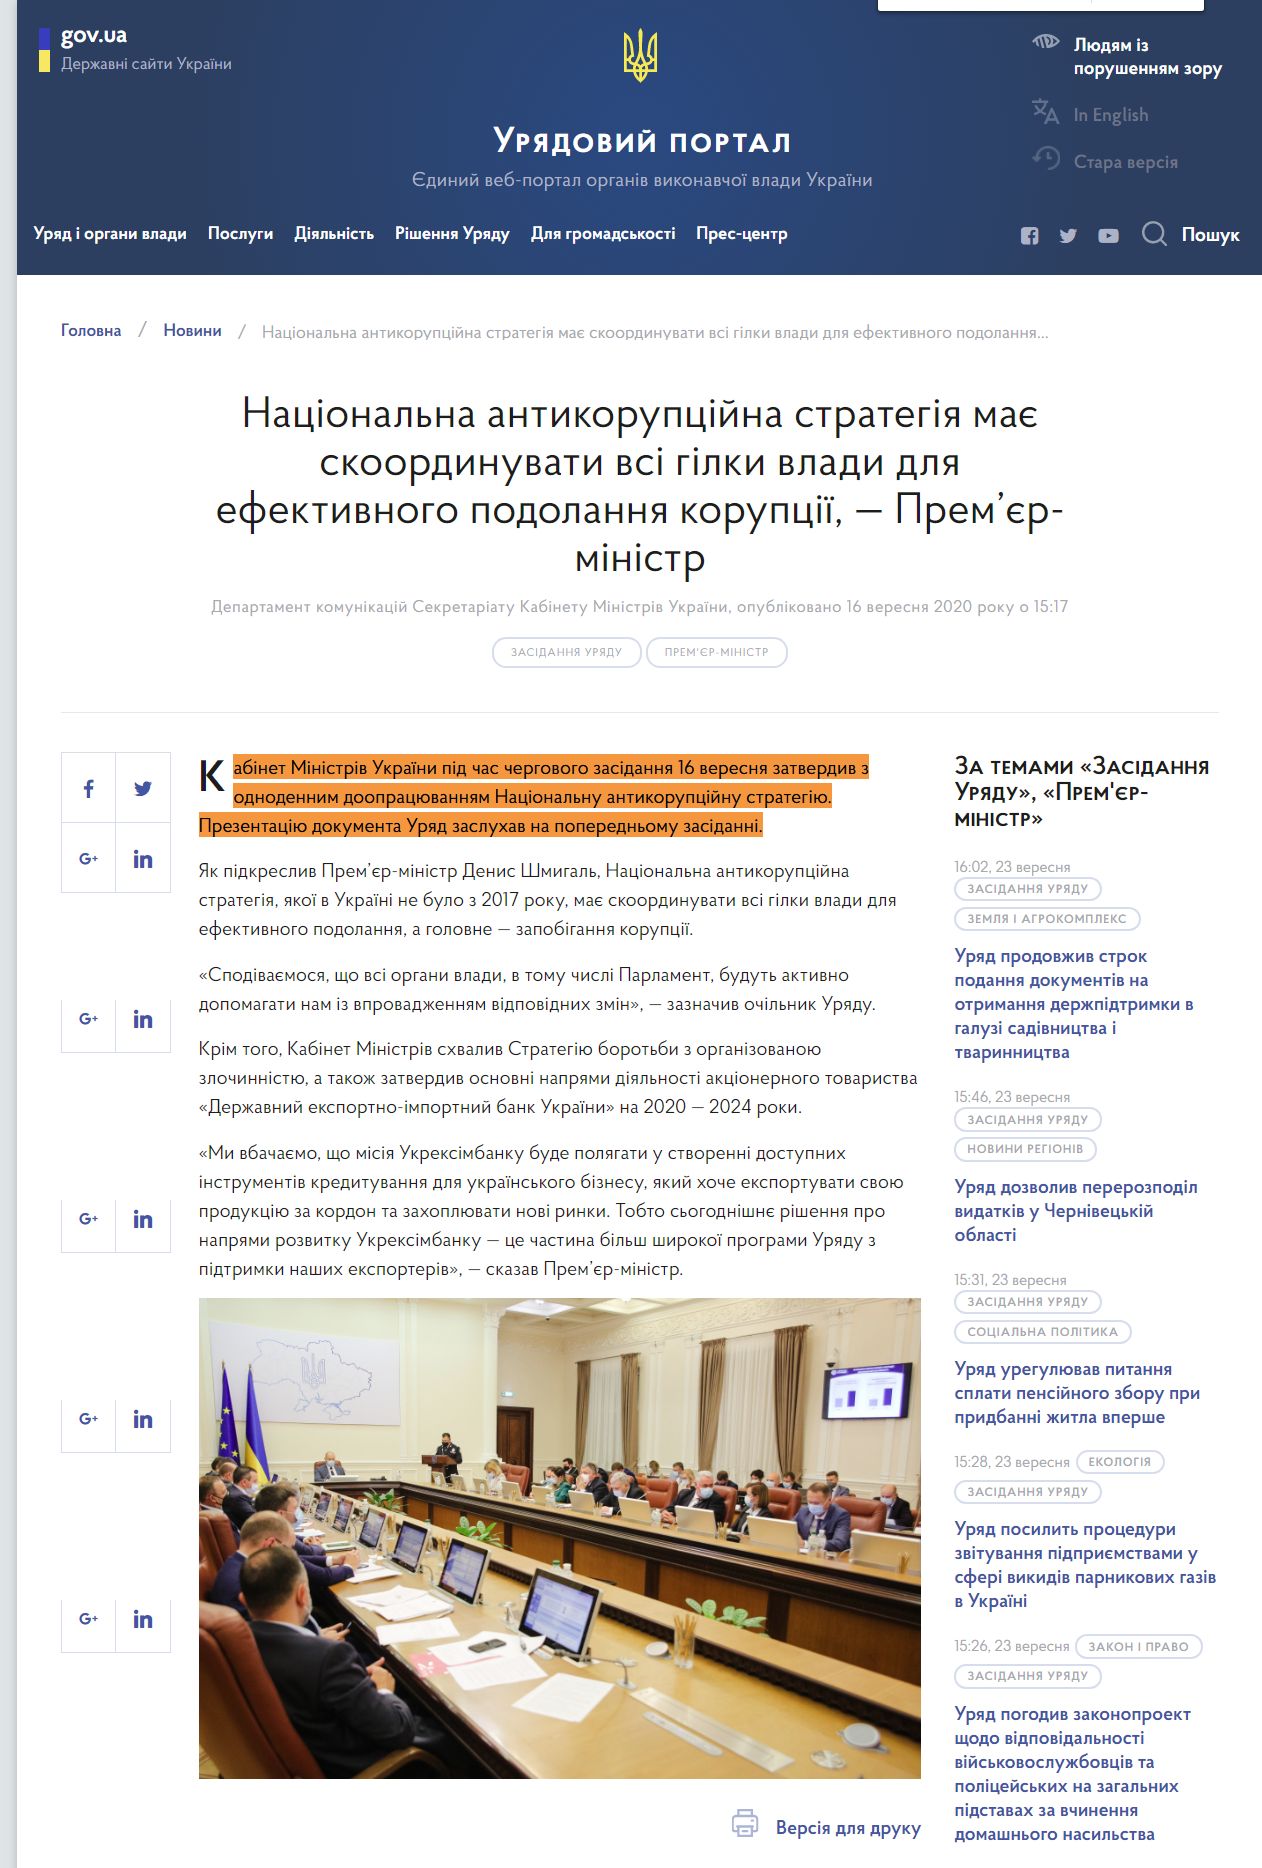 https://www.kmu.gov.ua/news/nacionalna-antikorupcijna-strategiya-maye-skoordinuvati-vsi-gilki-vladi-dlya-efektivnogo-podolannya-korupciyi-premyer-ministr